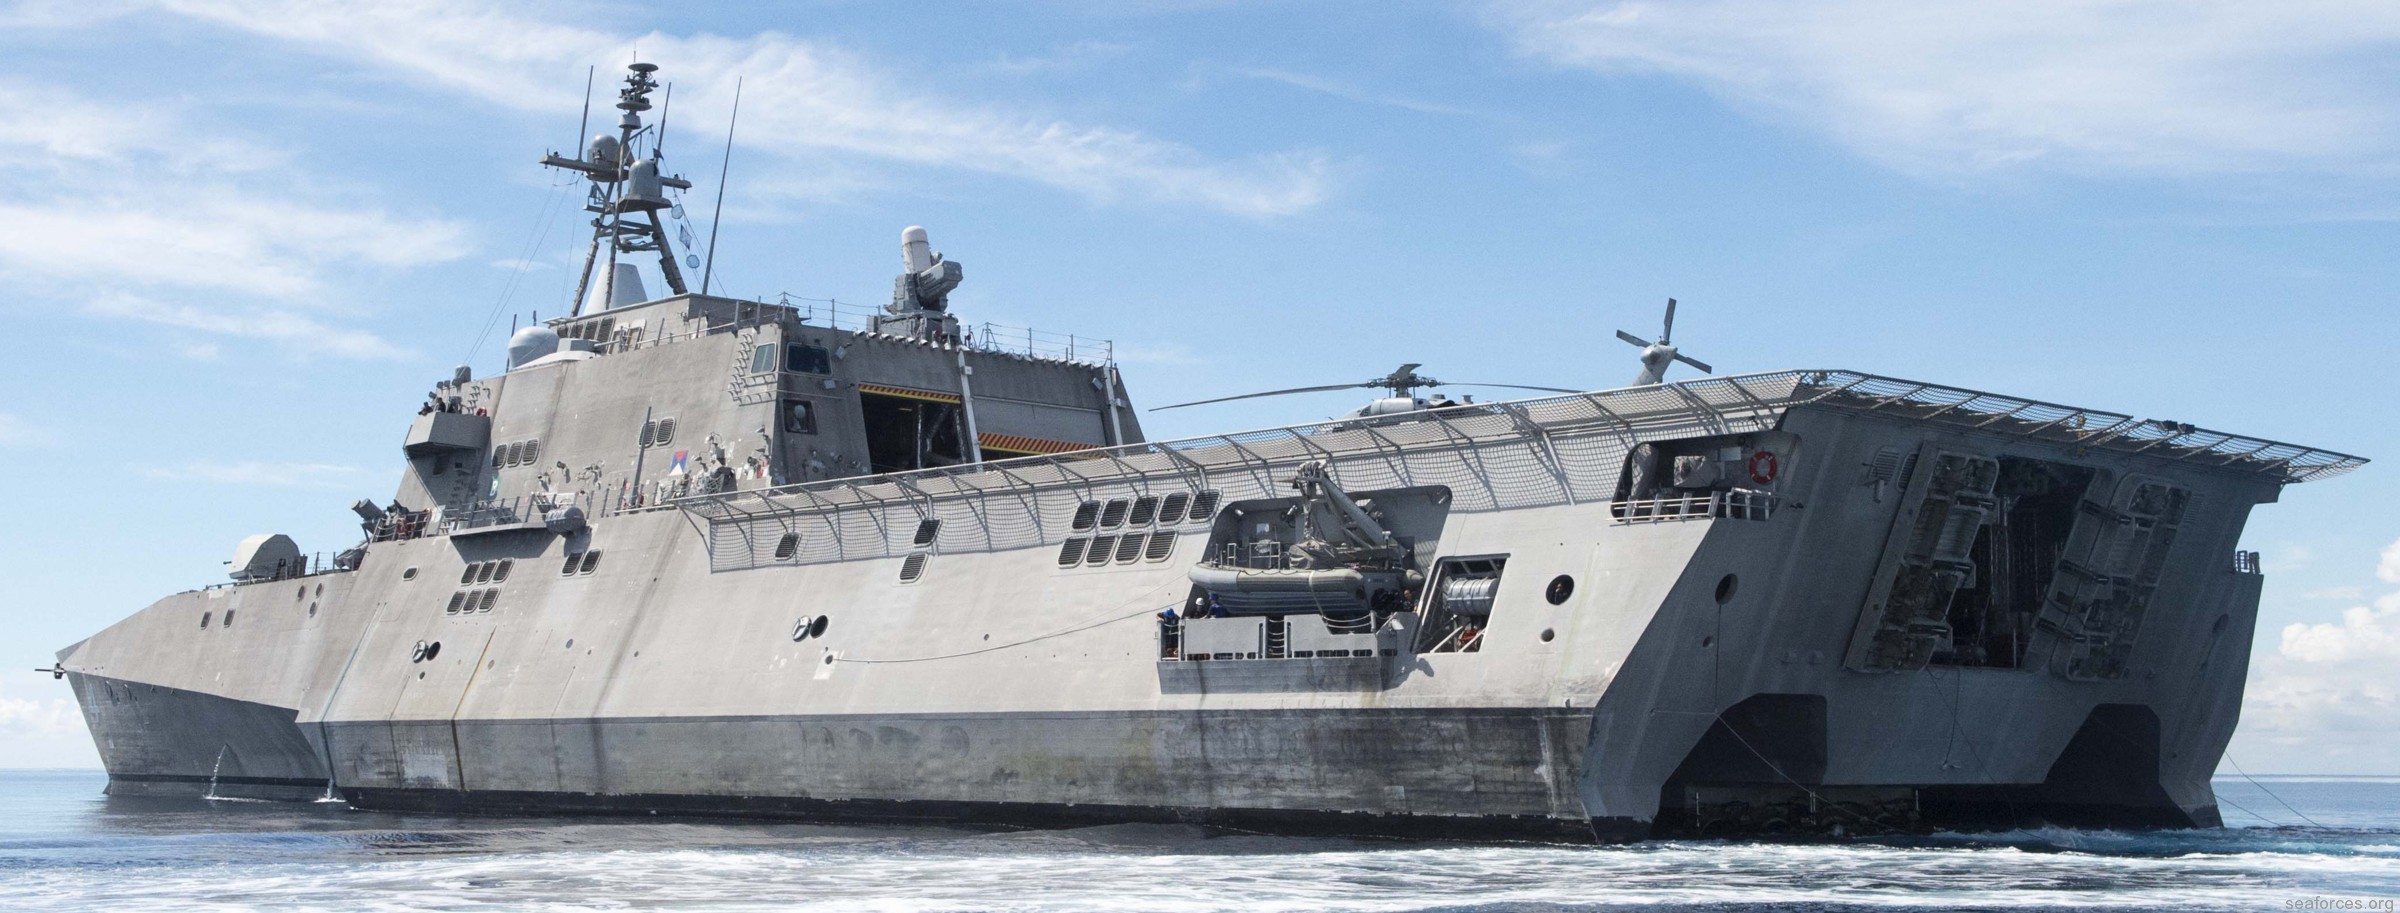 independence class littoral combat ship us navy austal 17c